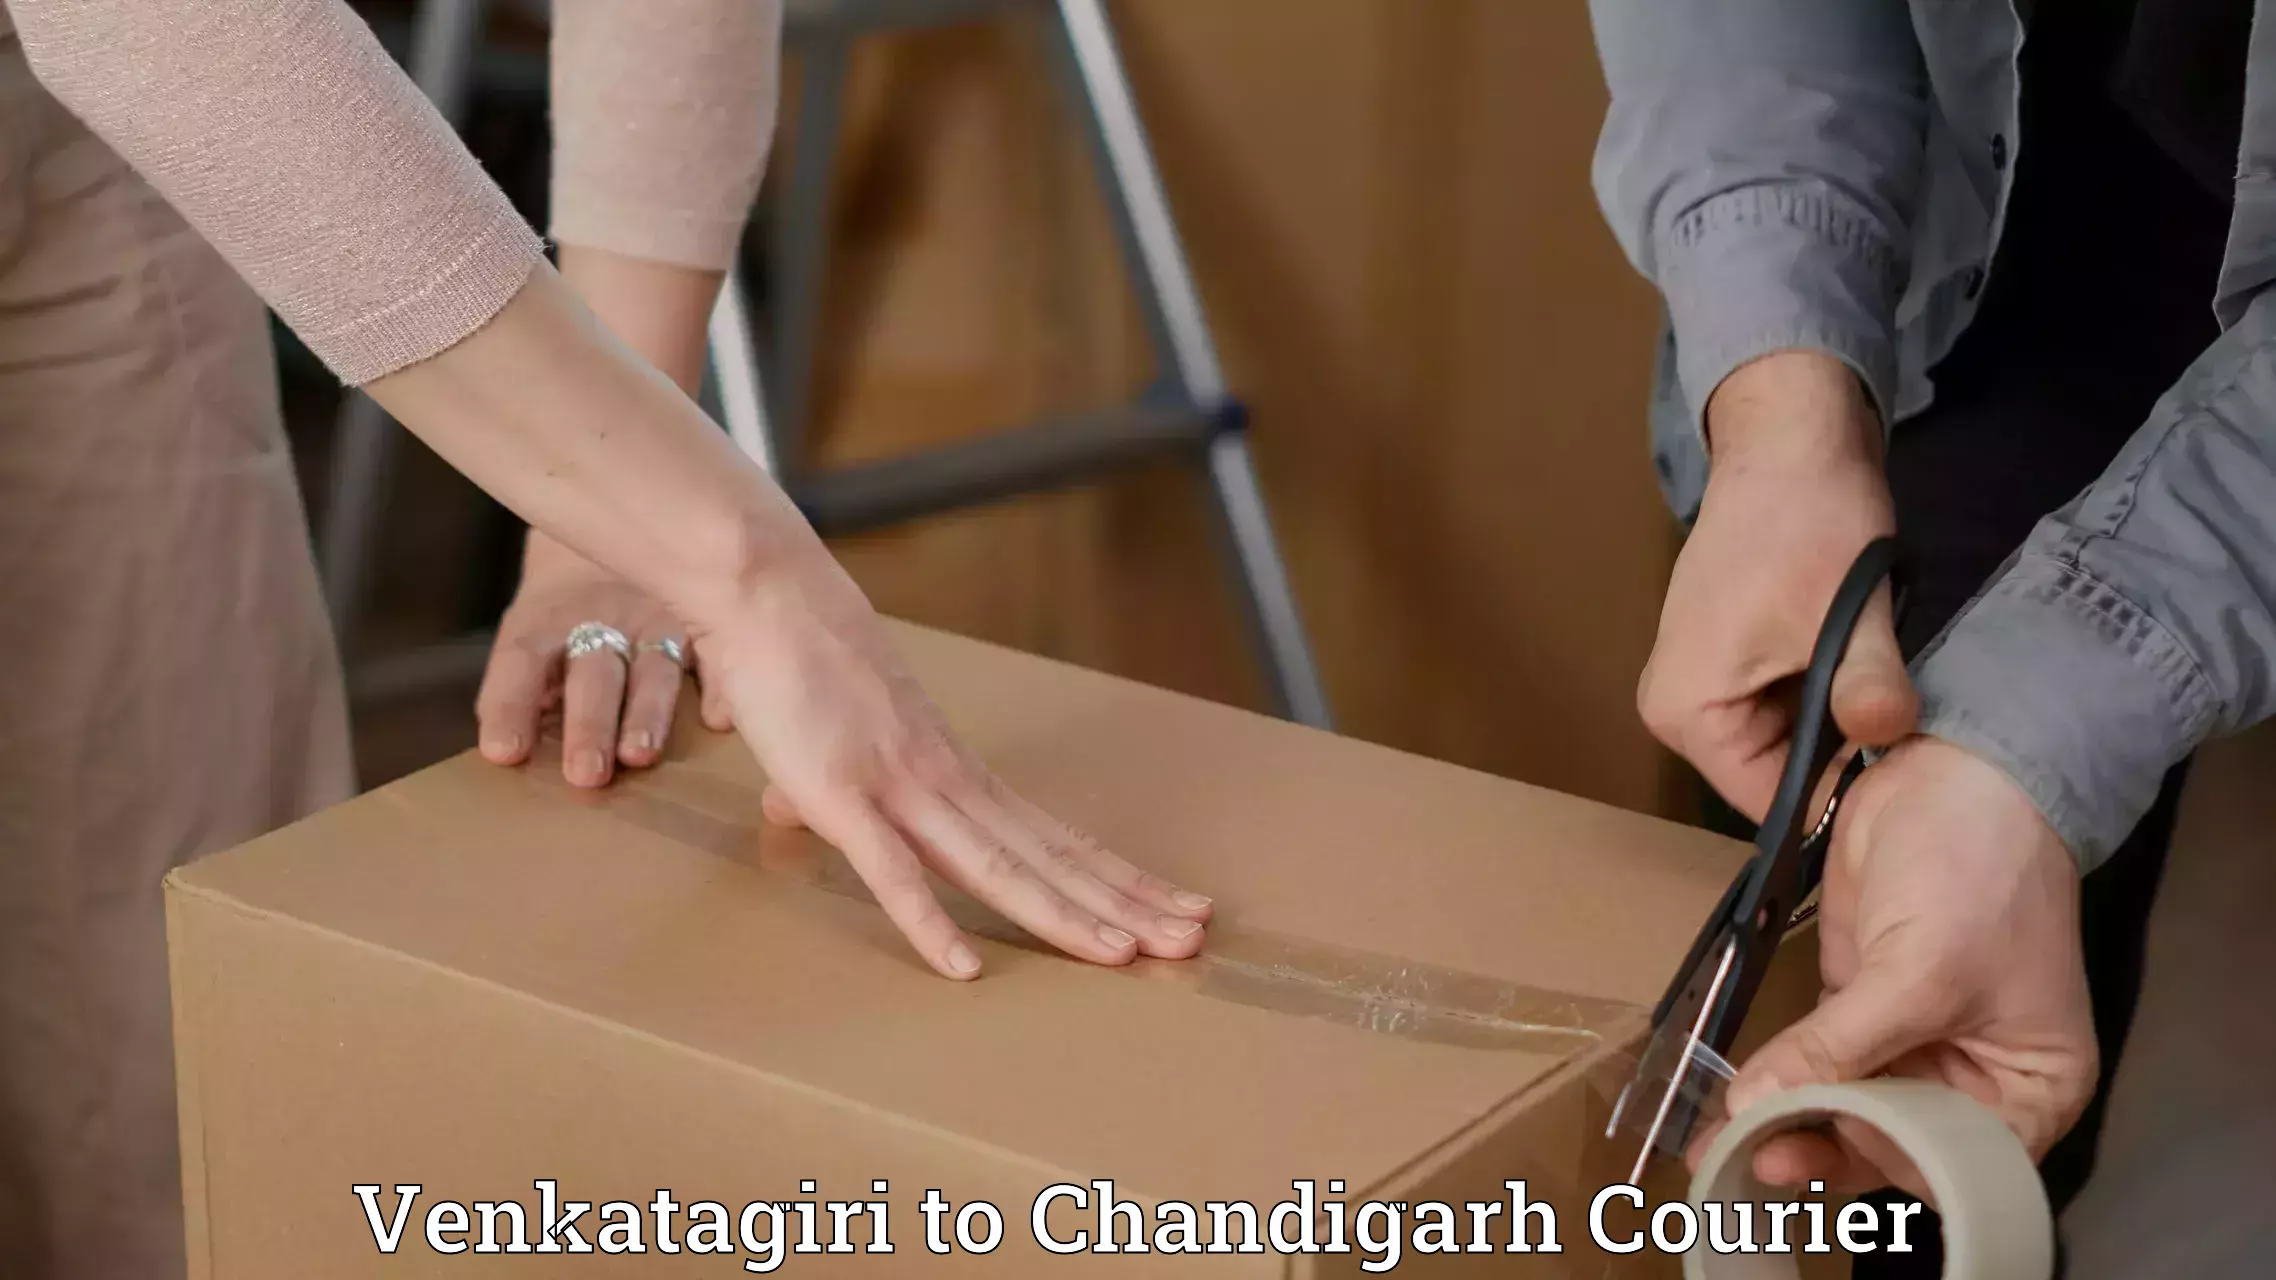 Luggage transport consultancy Venkatagiri to Chandigarh